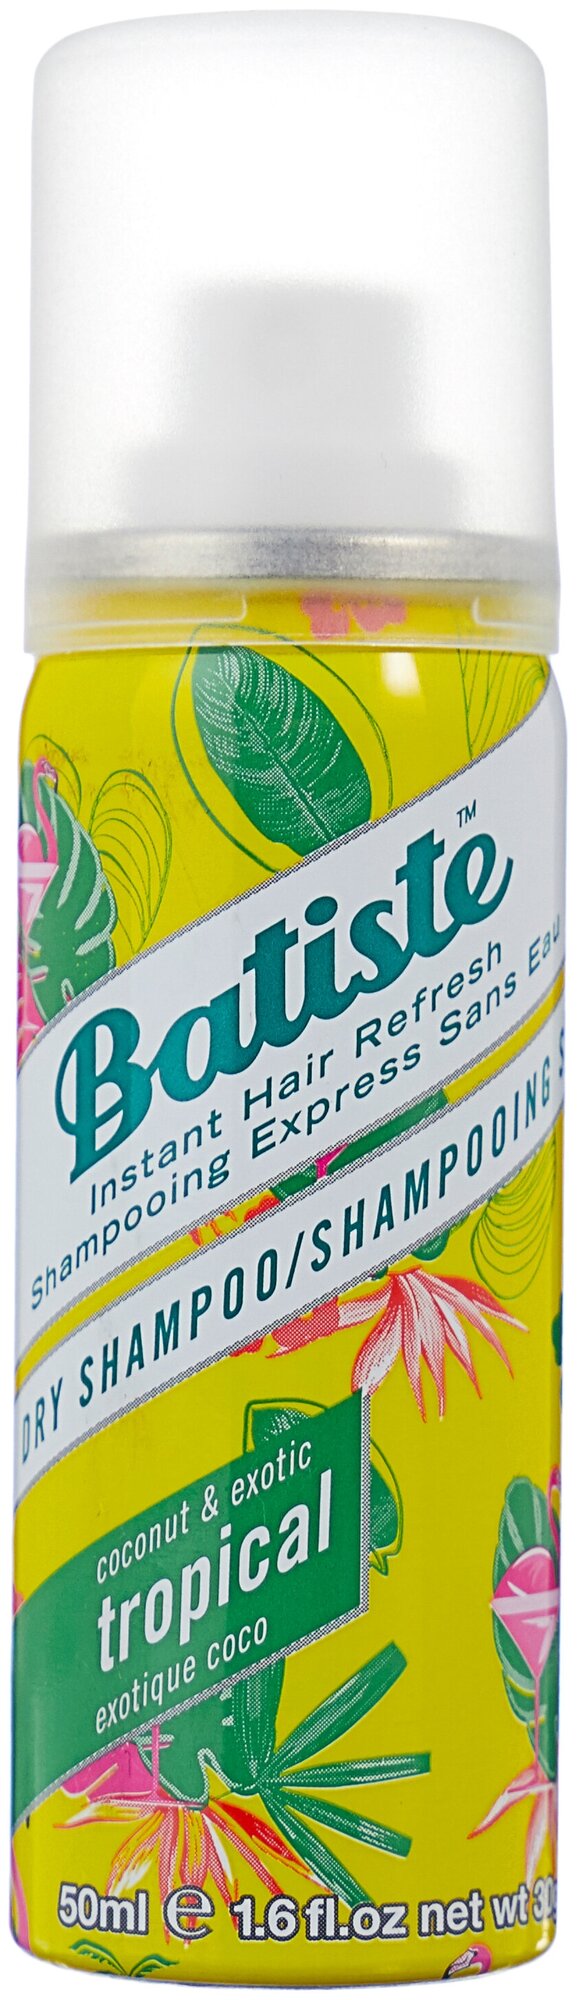 Batiste Dry Shampoo Tropical Coconut & Exotic     50 